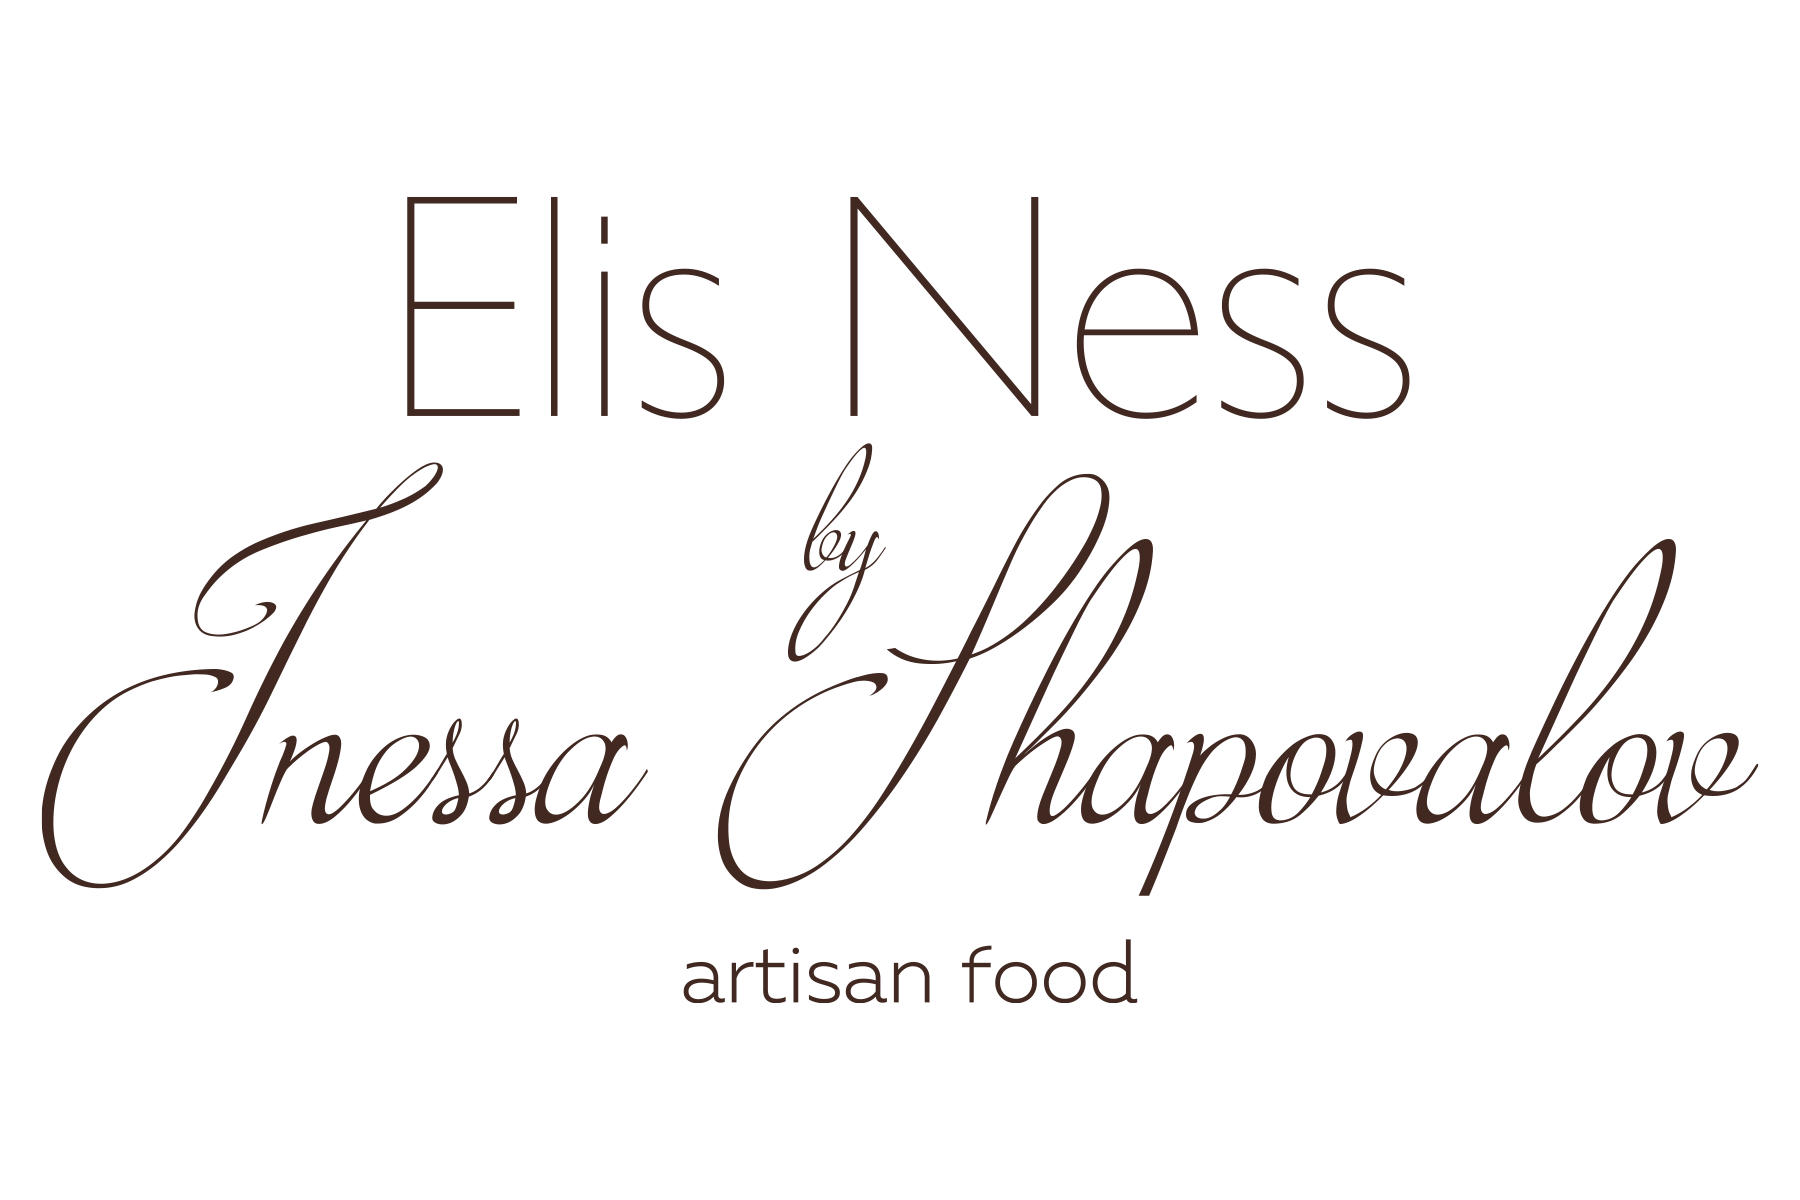 Elis Ness by Inessa Shapovalov